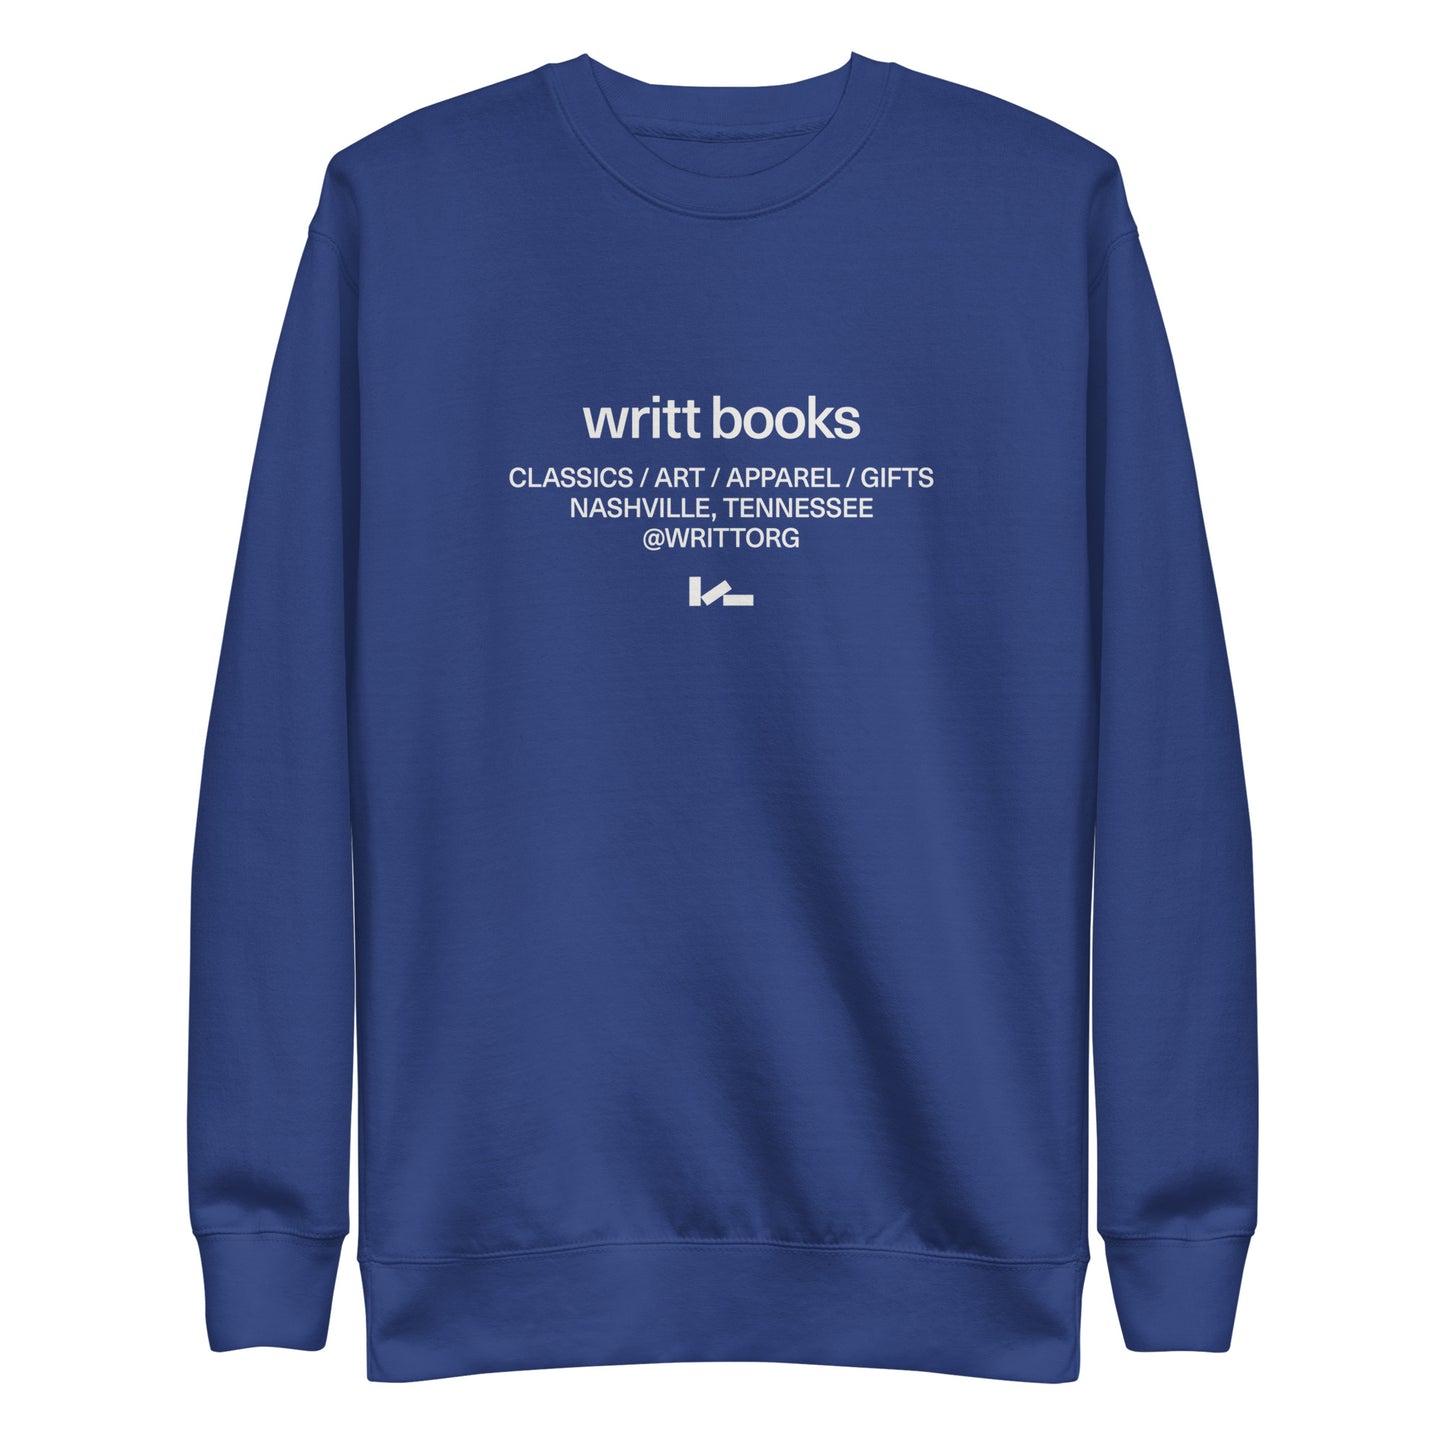 Shop Sweatshirt